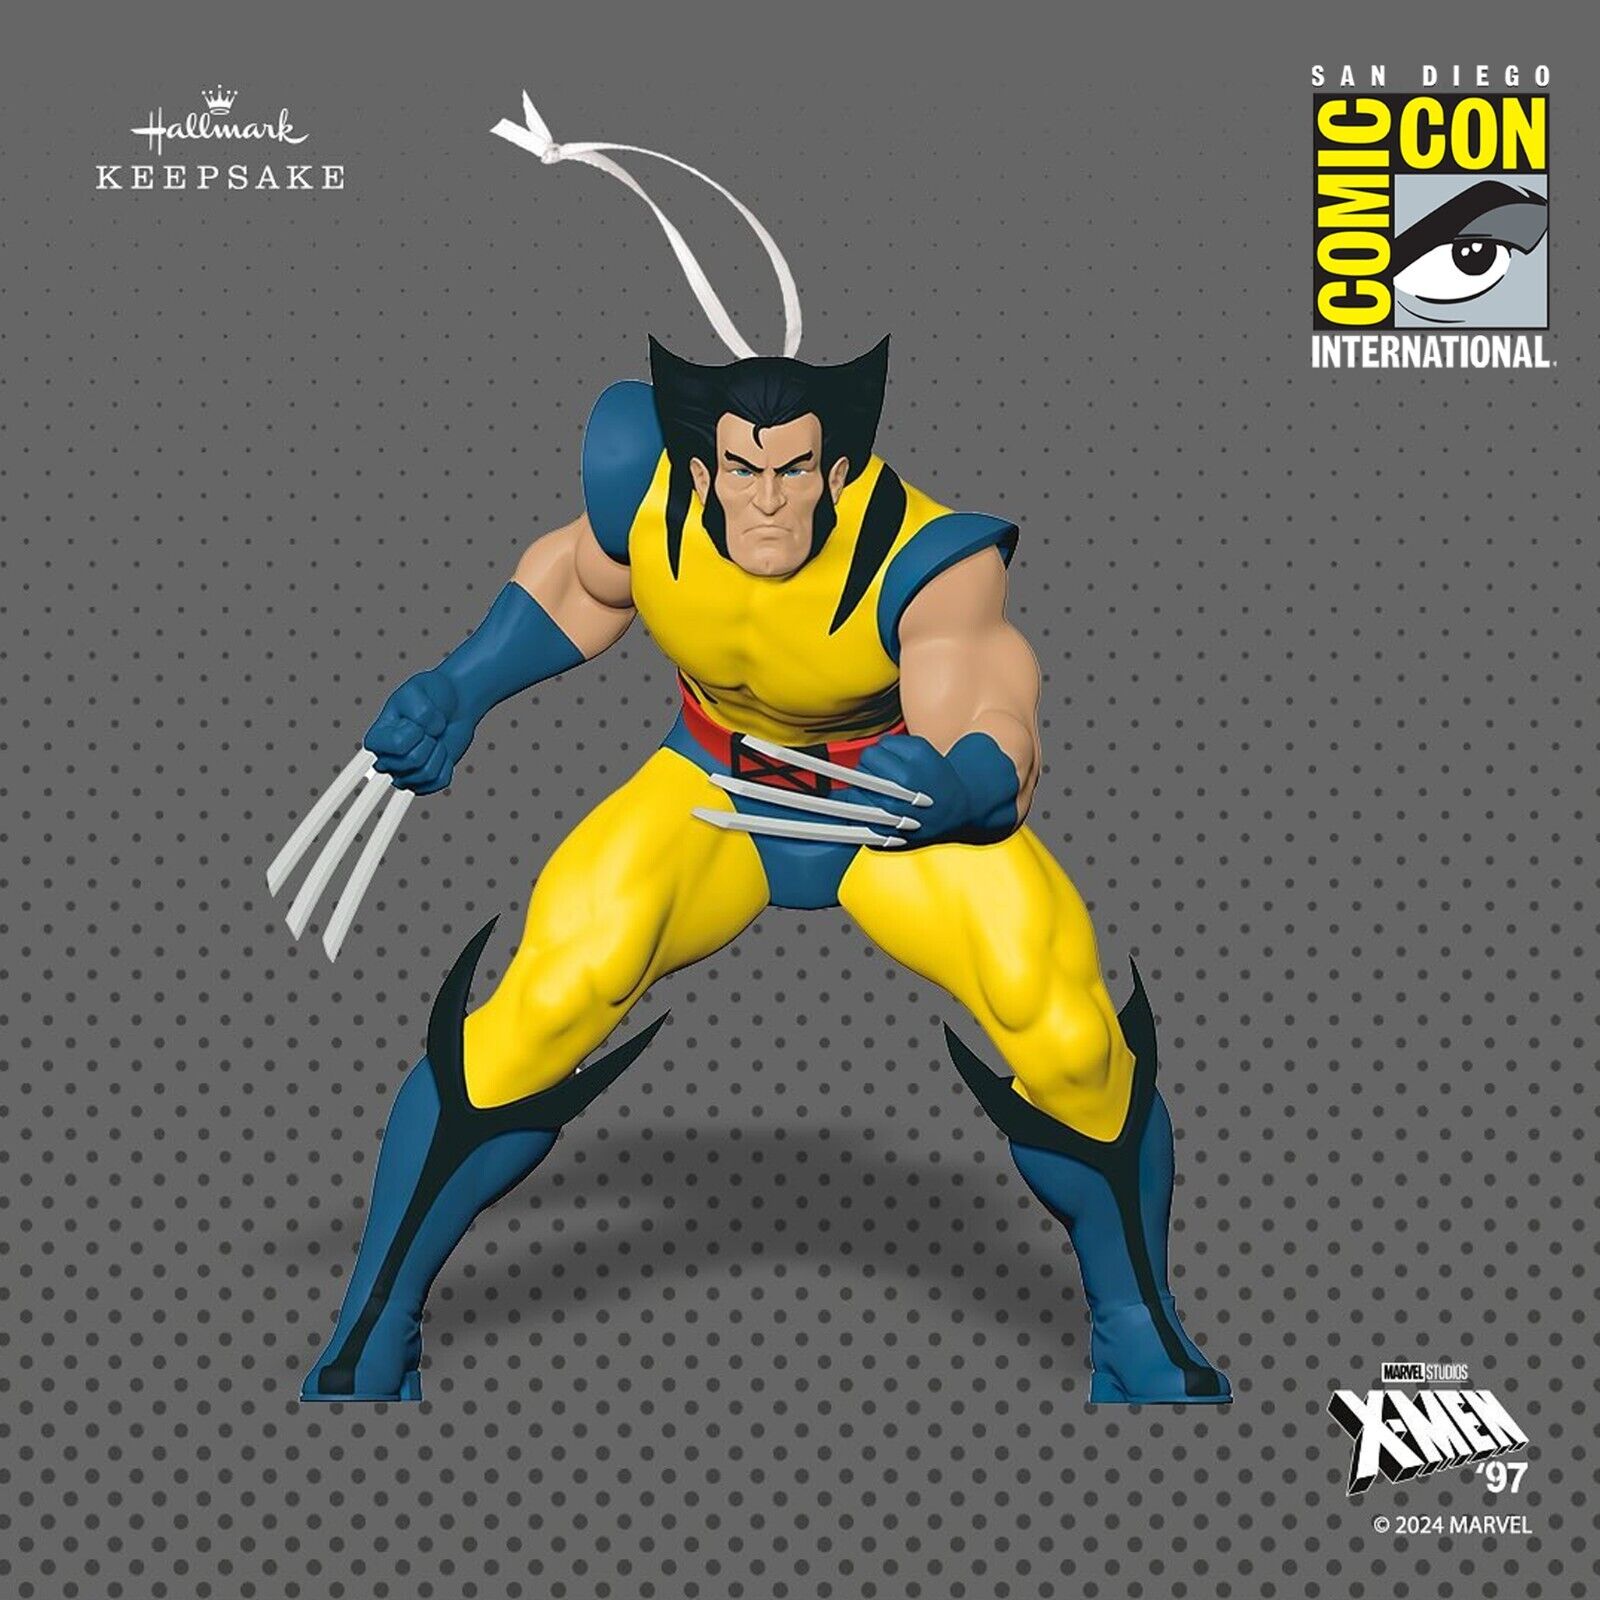 SDCC 2024 Hallmark Wolverine Unmasked Marvel Studios X-Men ’97 Keepsake Ornament